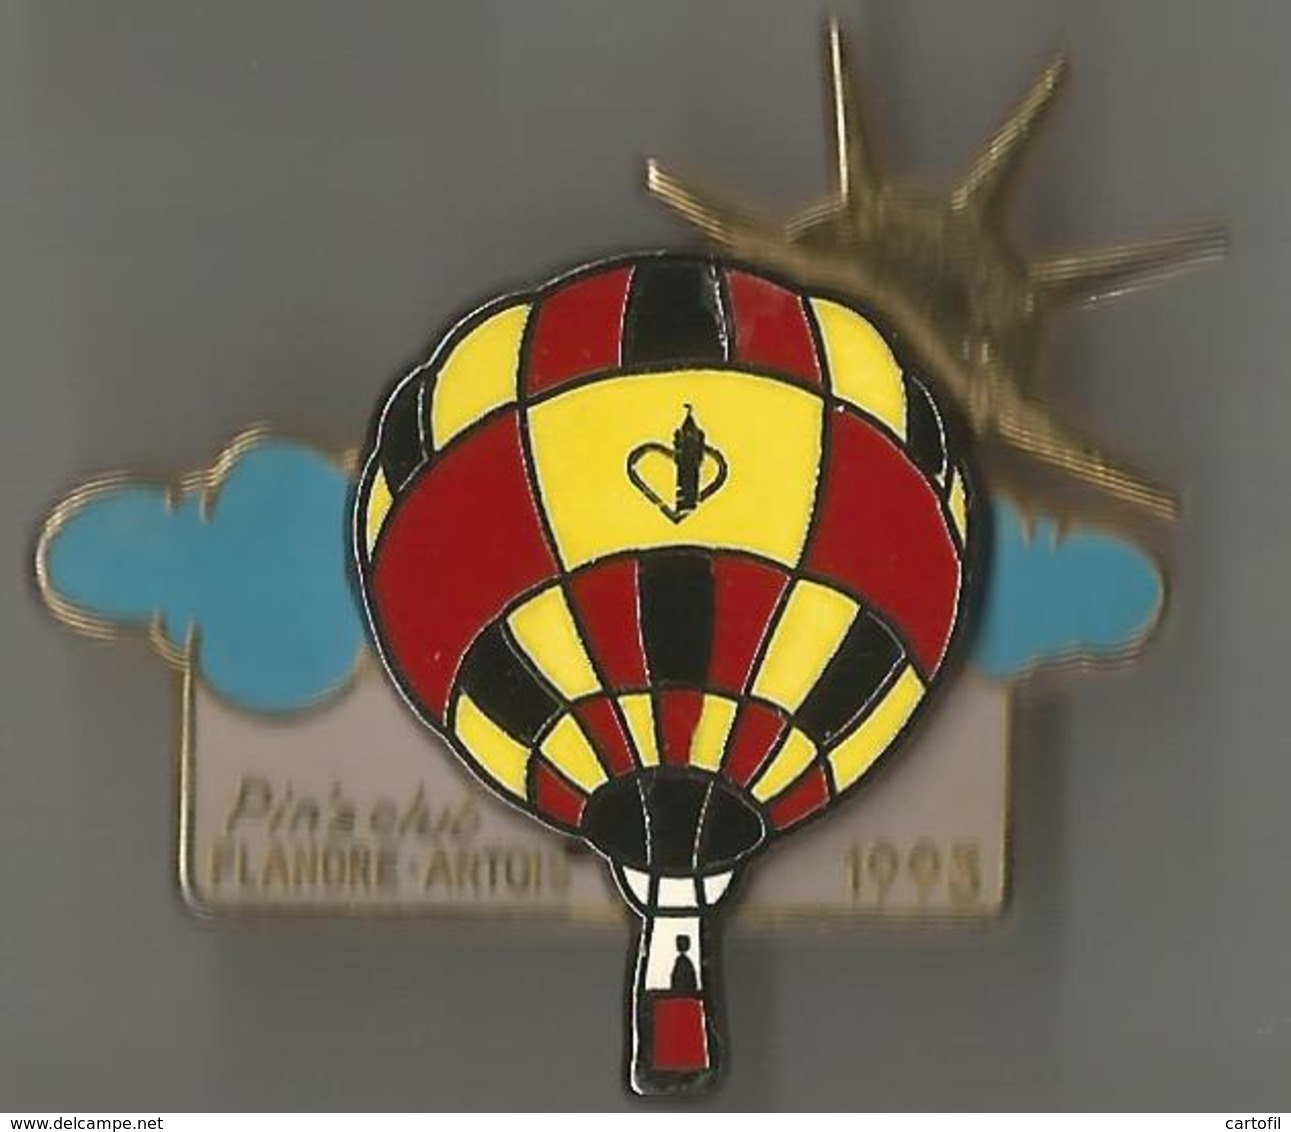 Pin's Pin's Club Flandre-Artois 1993 (montgolfière) - Fesselballons